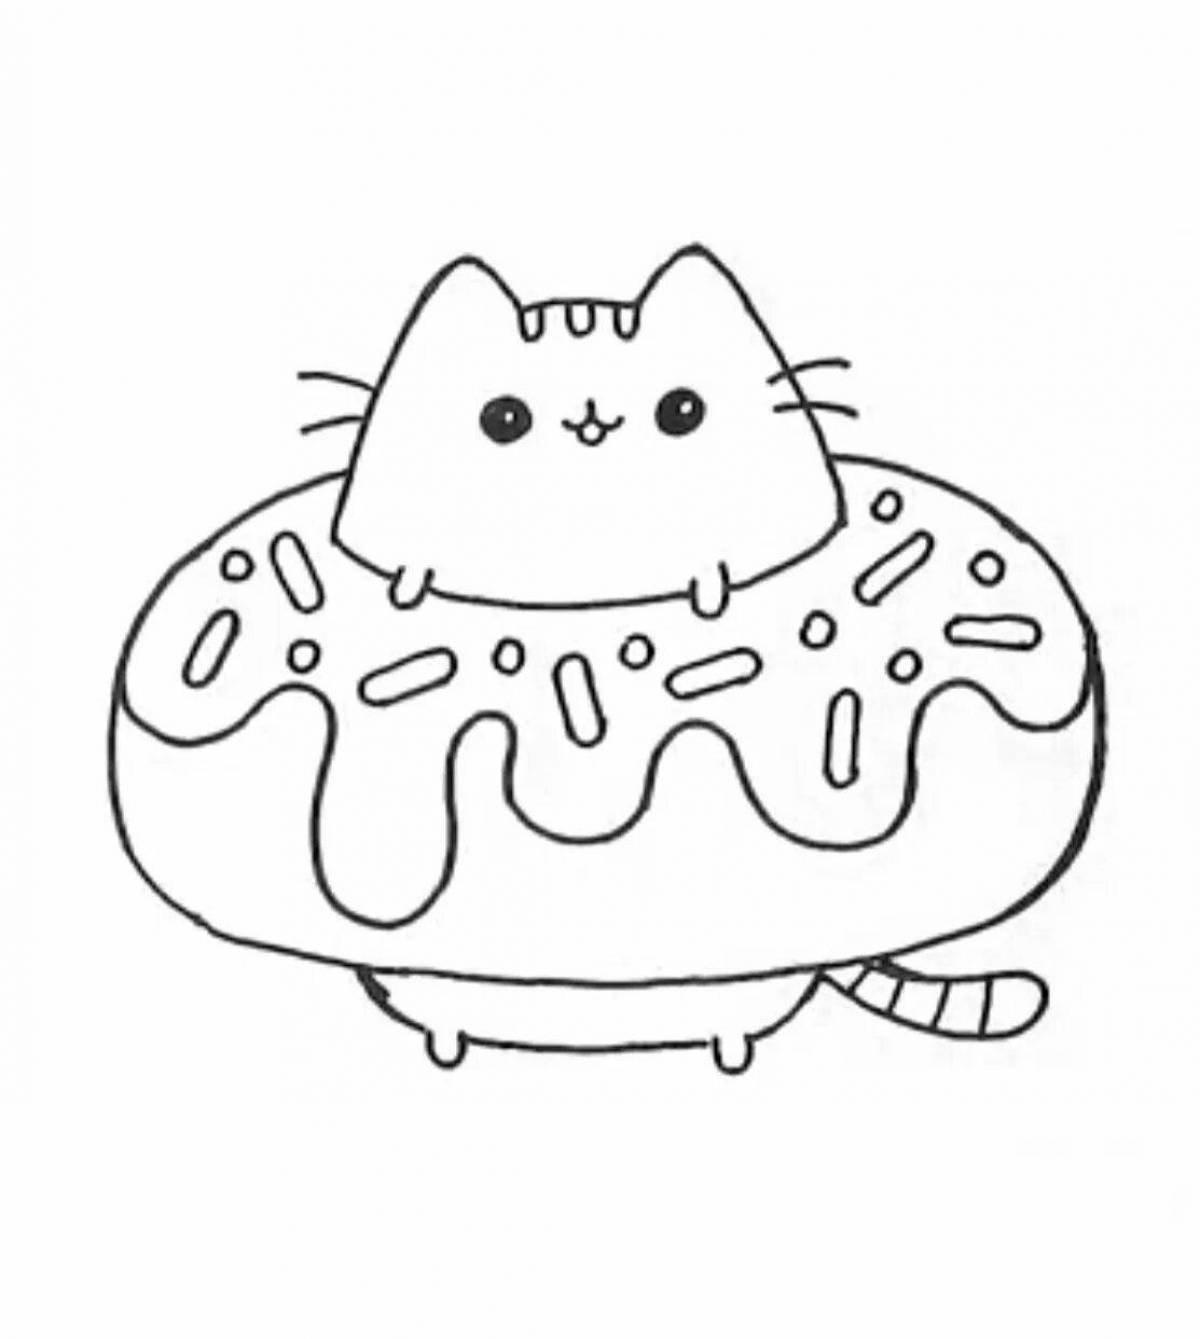 Funny kawaii cat coloring book